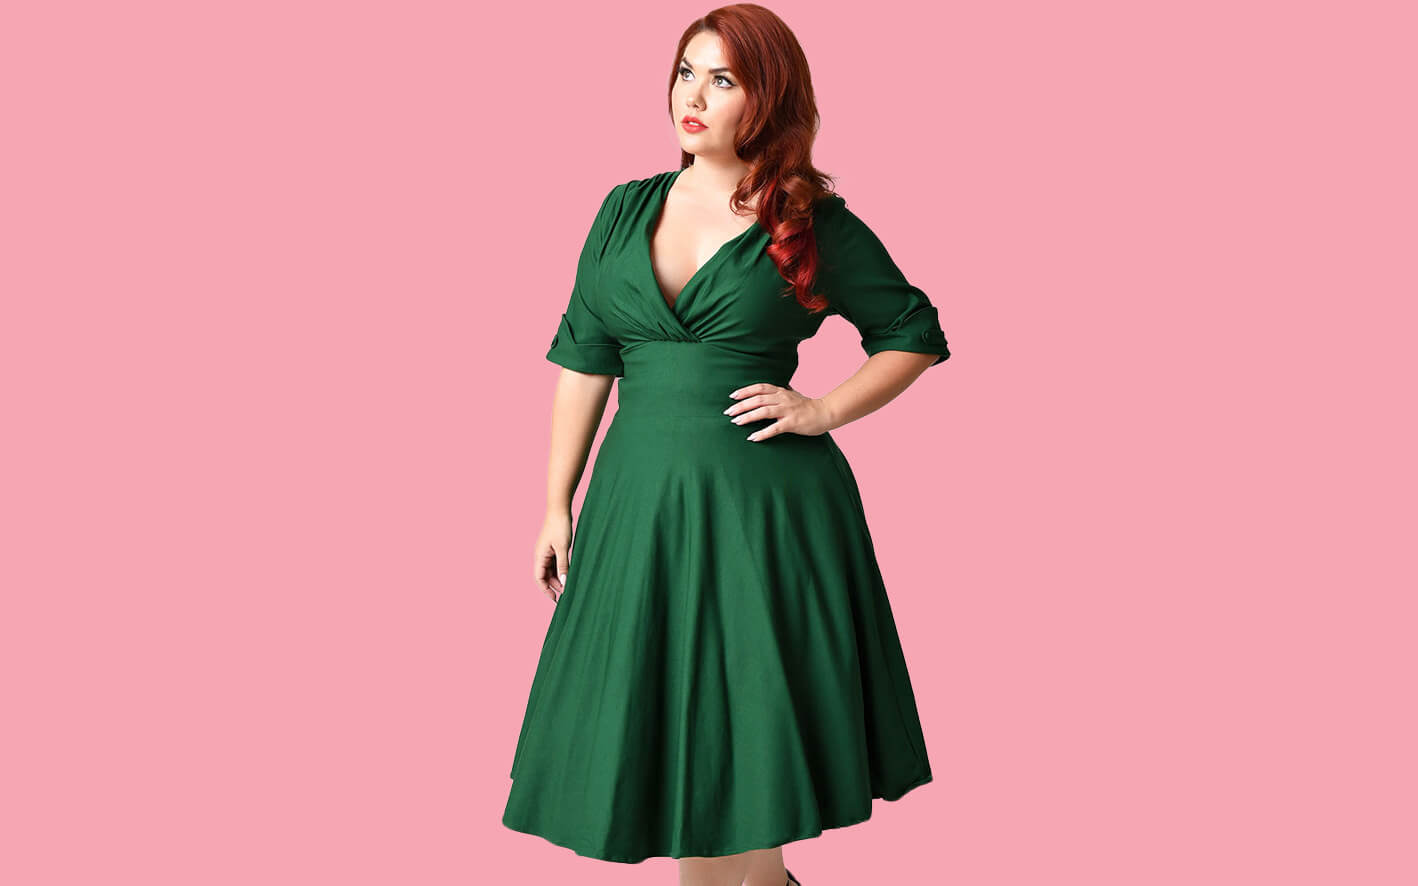 Plus size model wearing the Delores emerald green retro dress